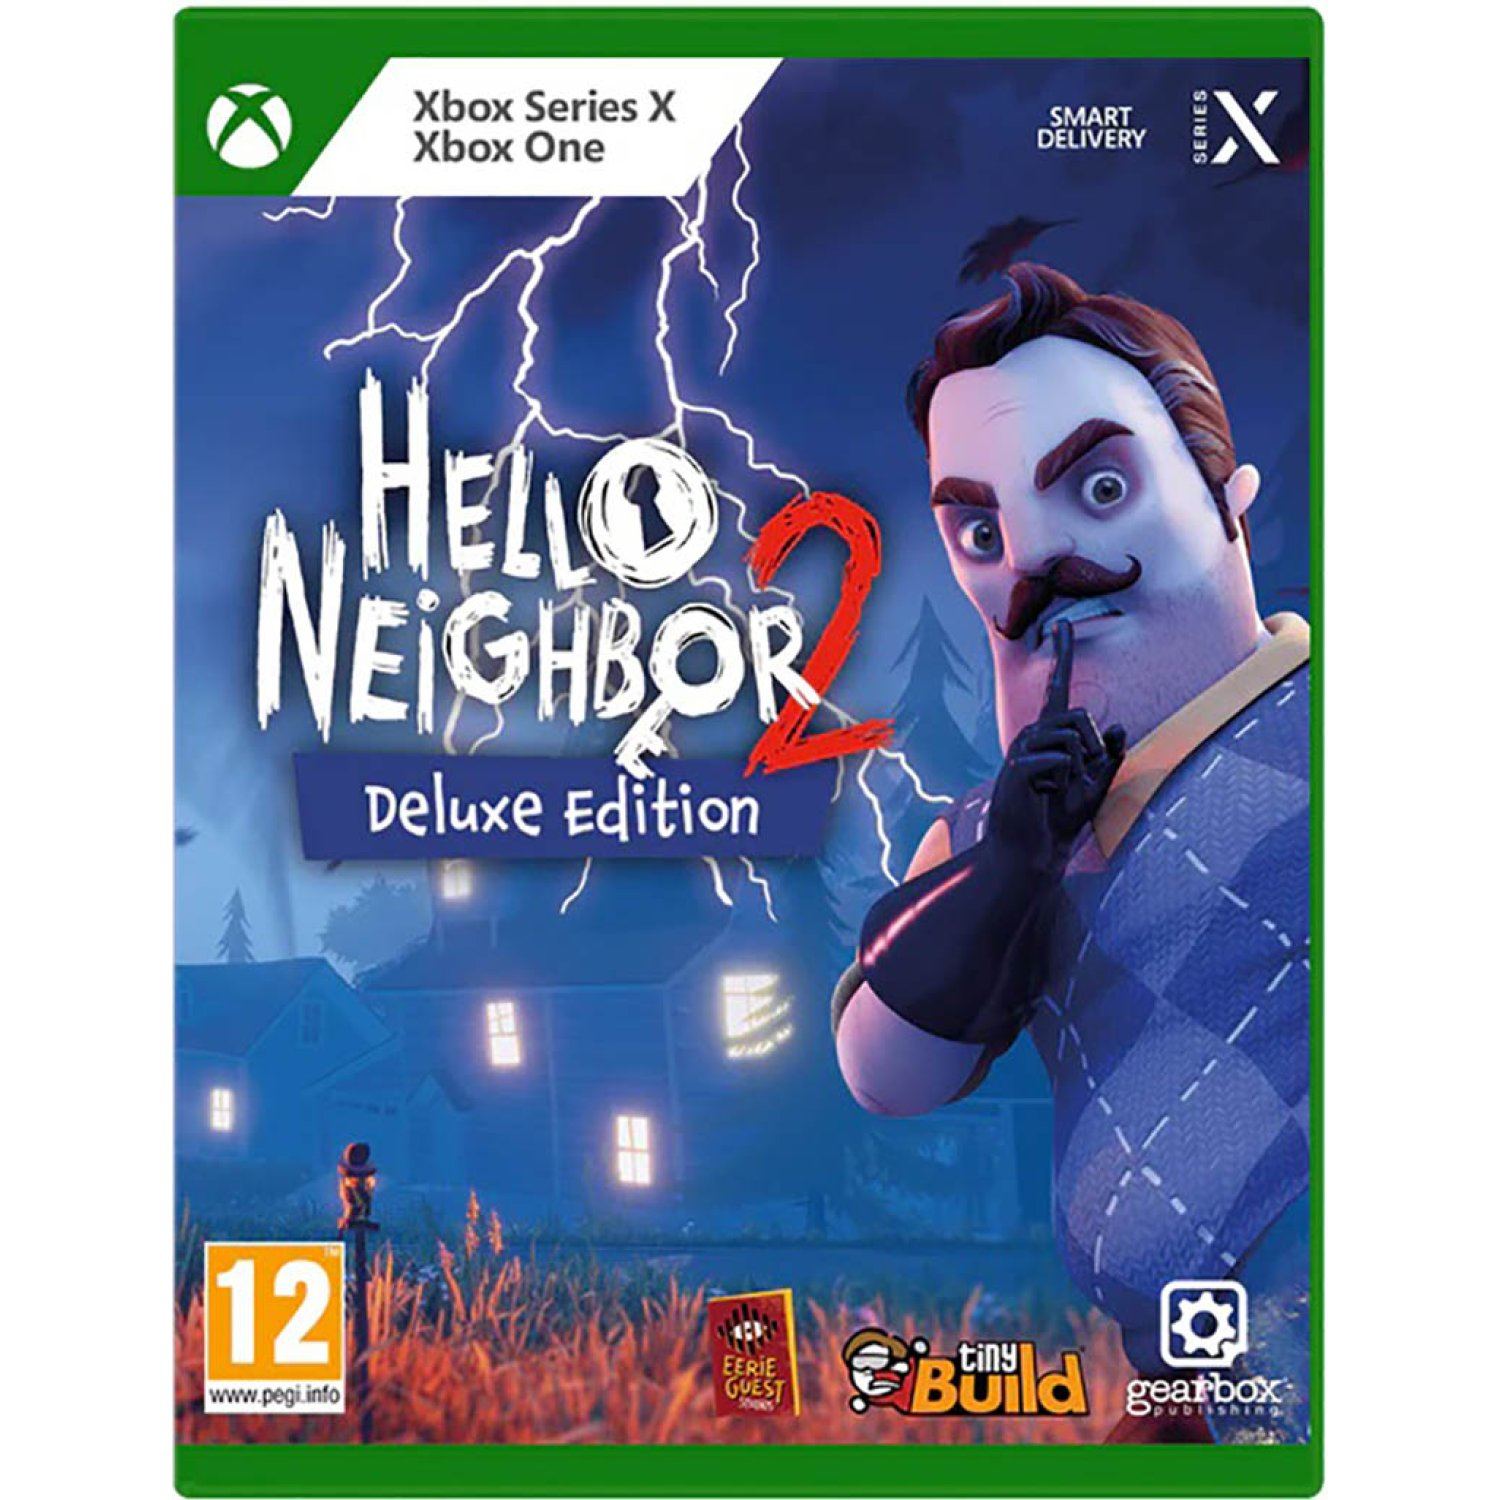 Hello Neighbor 2 Deluxe Edition von Gearbox Publishing